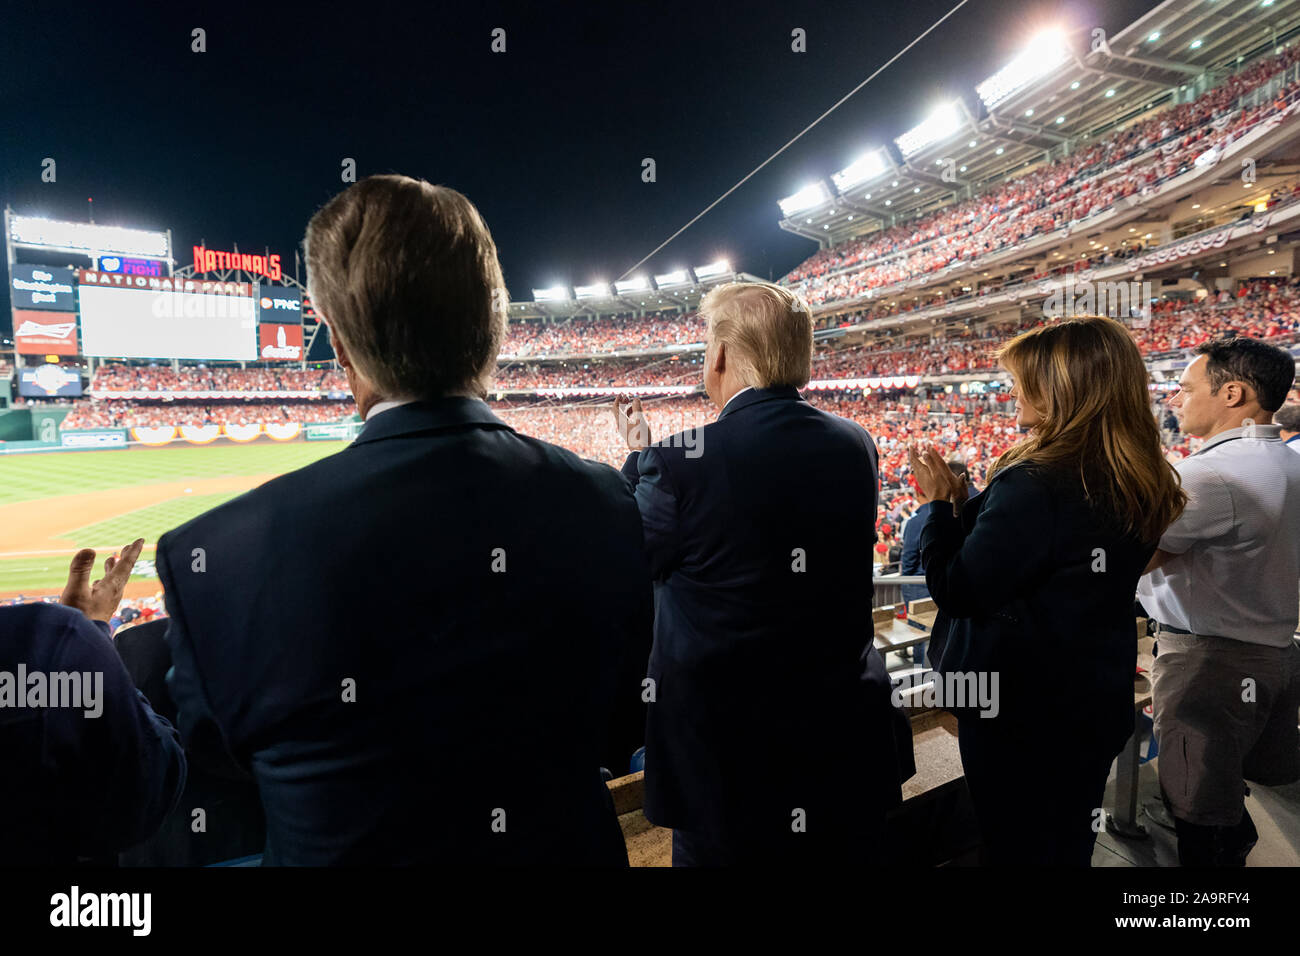 Video: Trump Does 'Tomahawk Chop' With Atlanta Fans at World Series